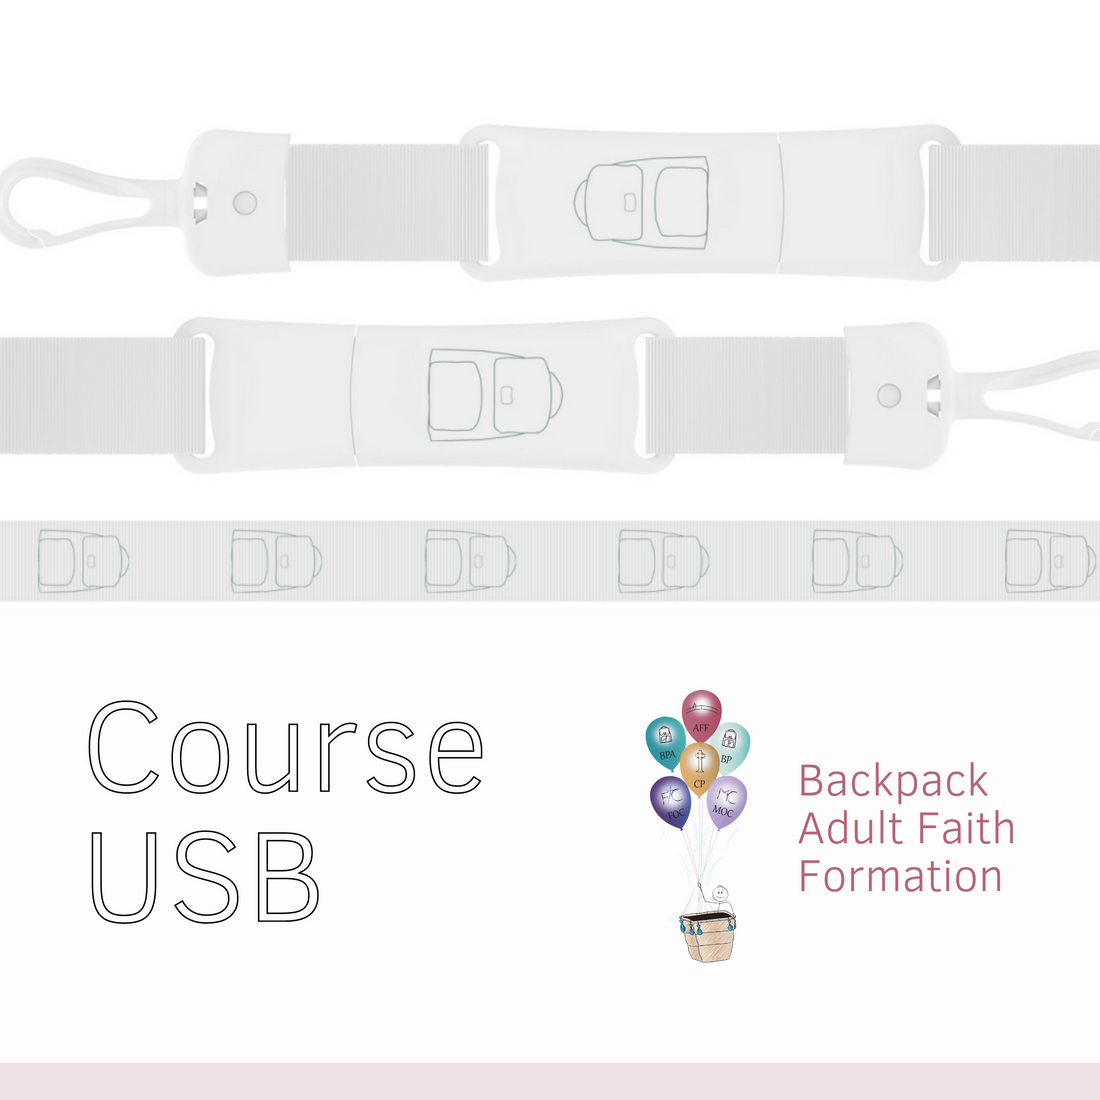 Backpack Adult Faith Formation